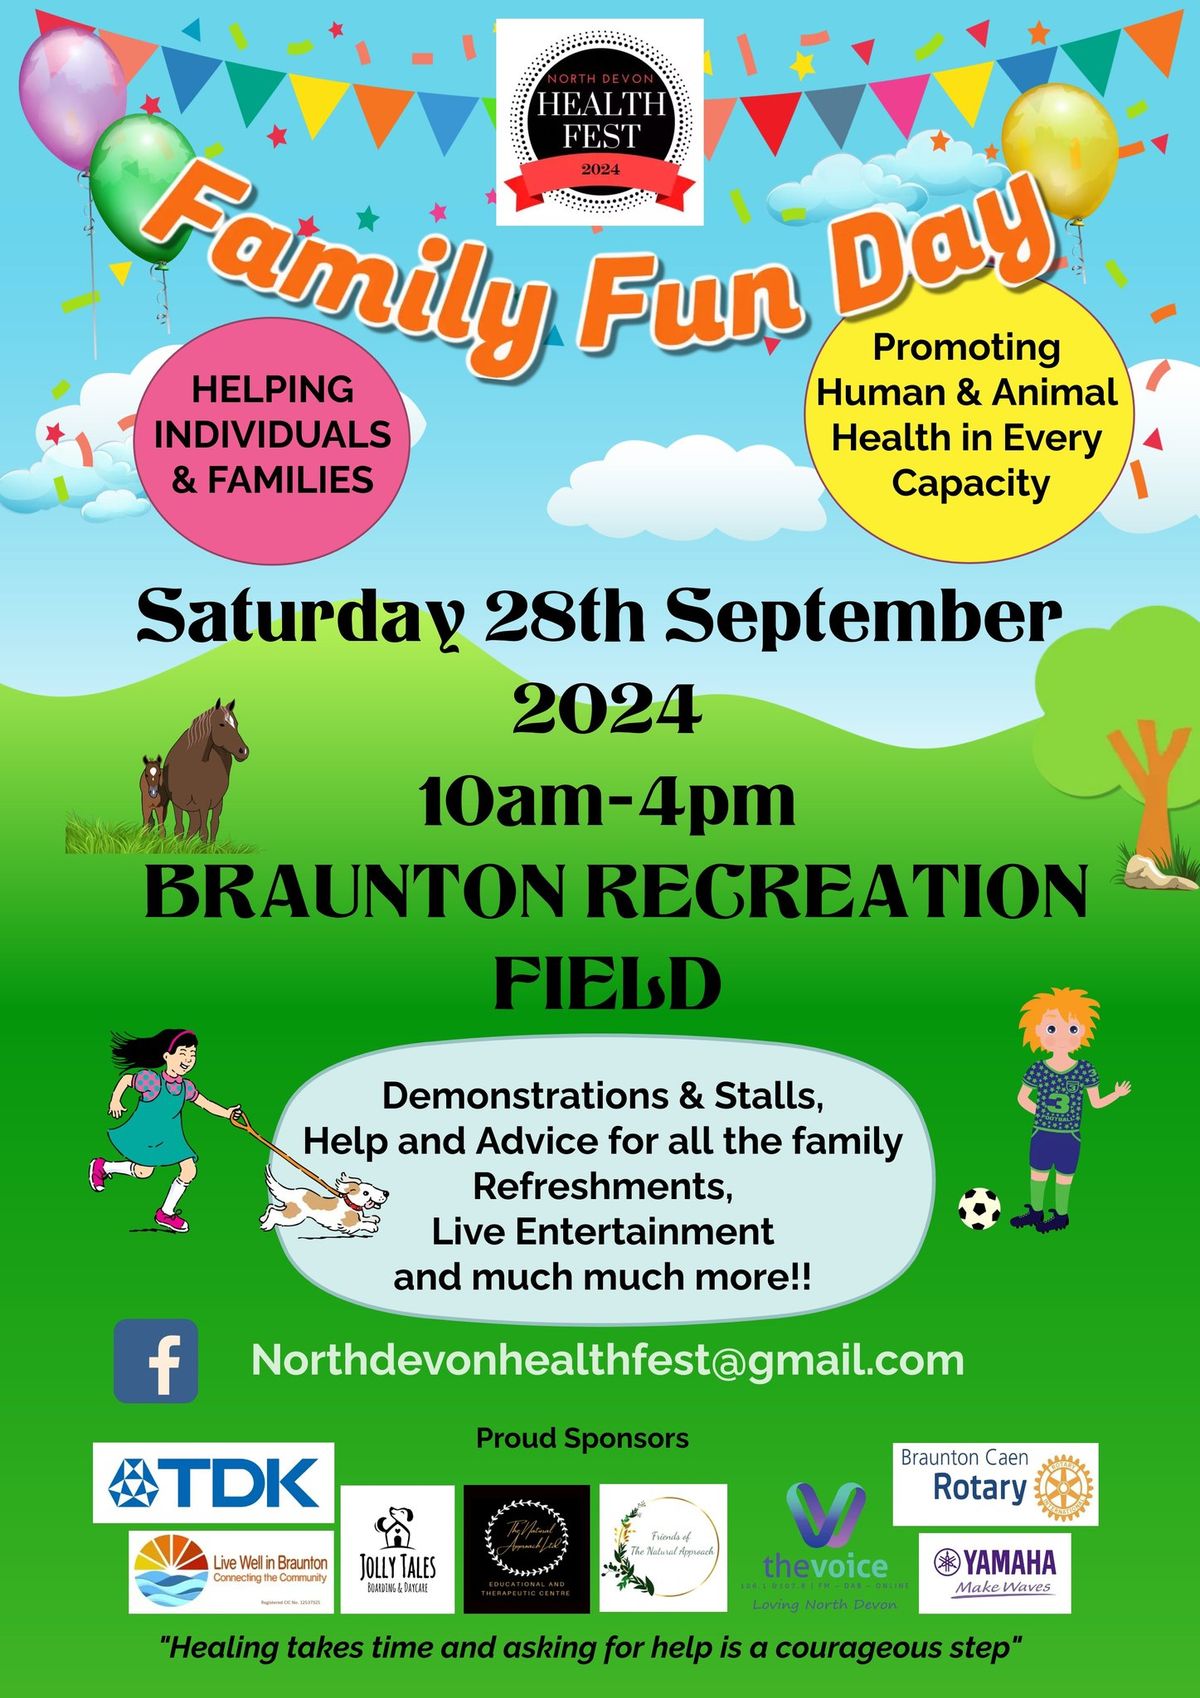 Find us at: North Devon Health Fest Family Fun Day